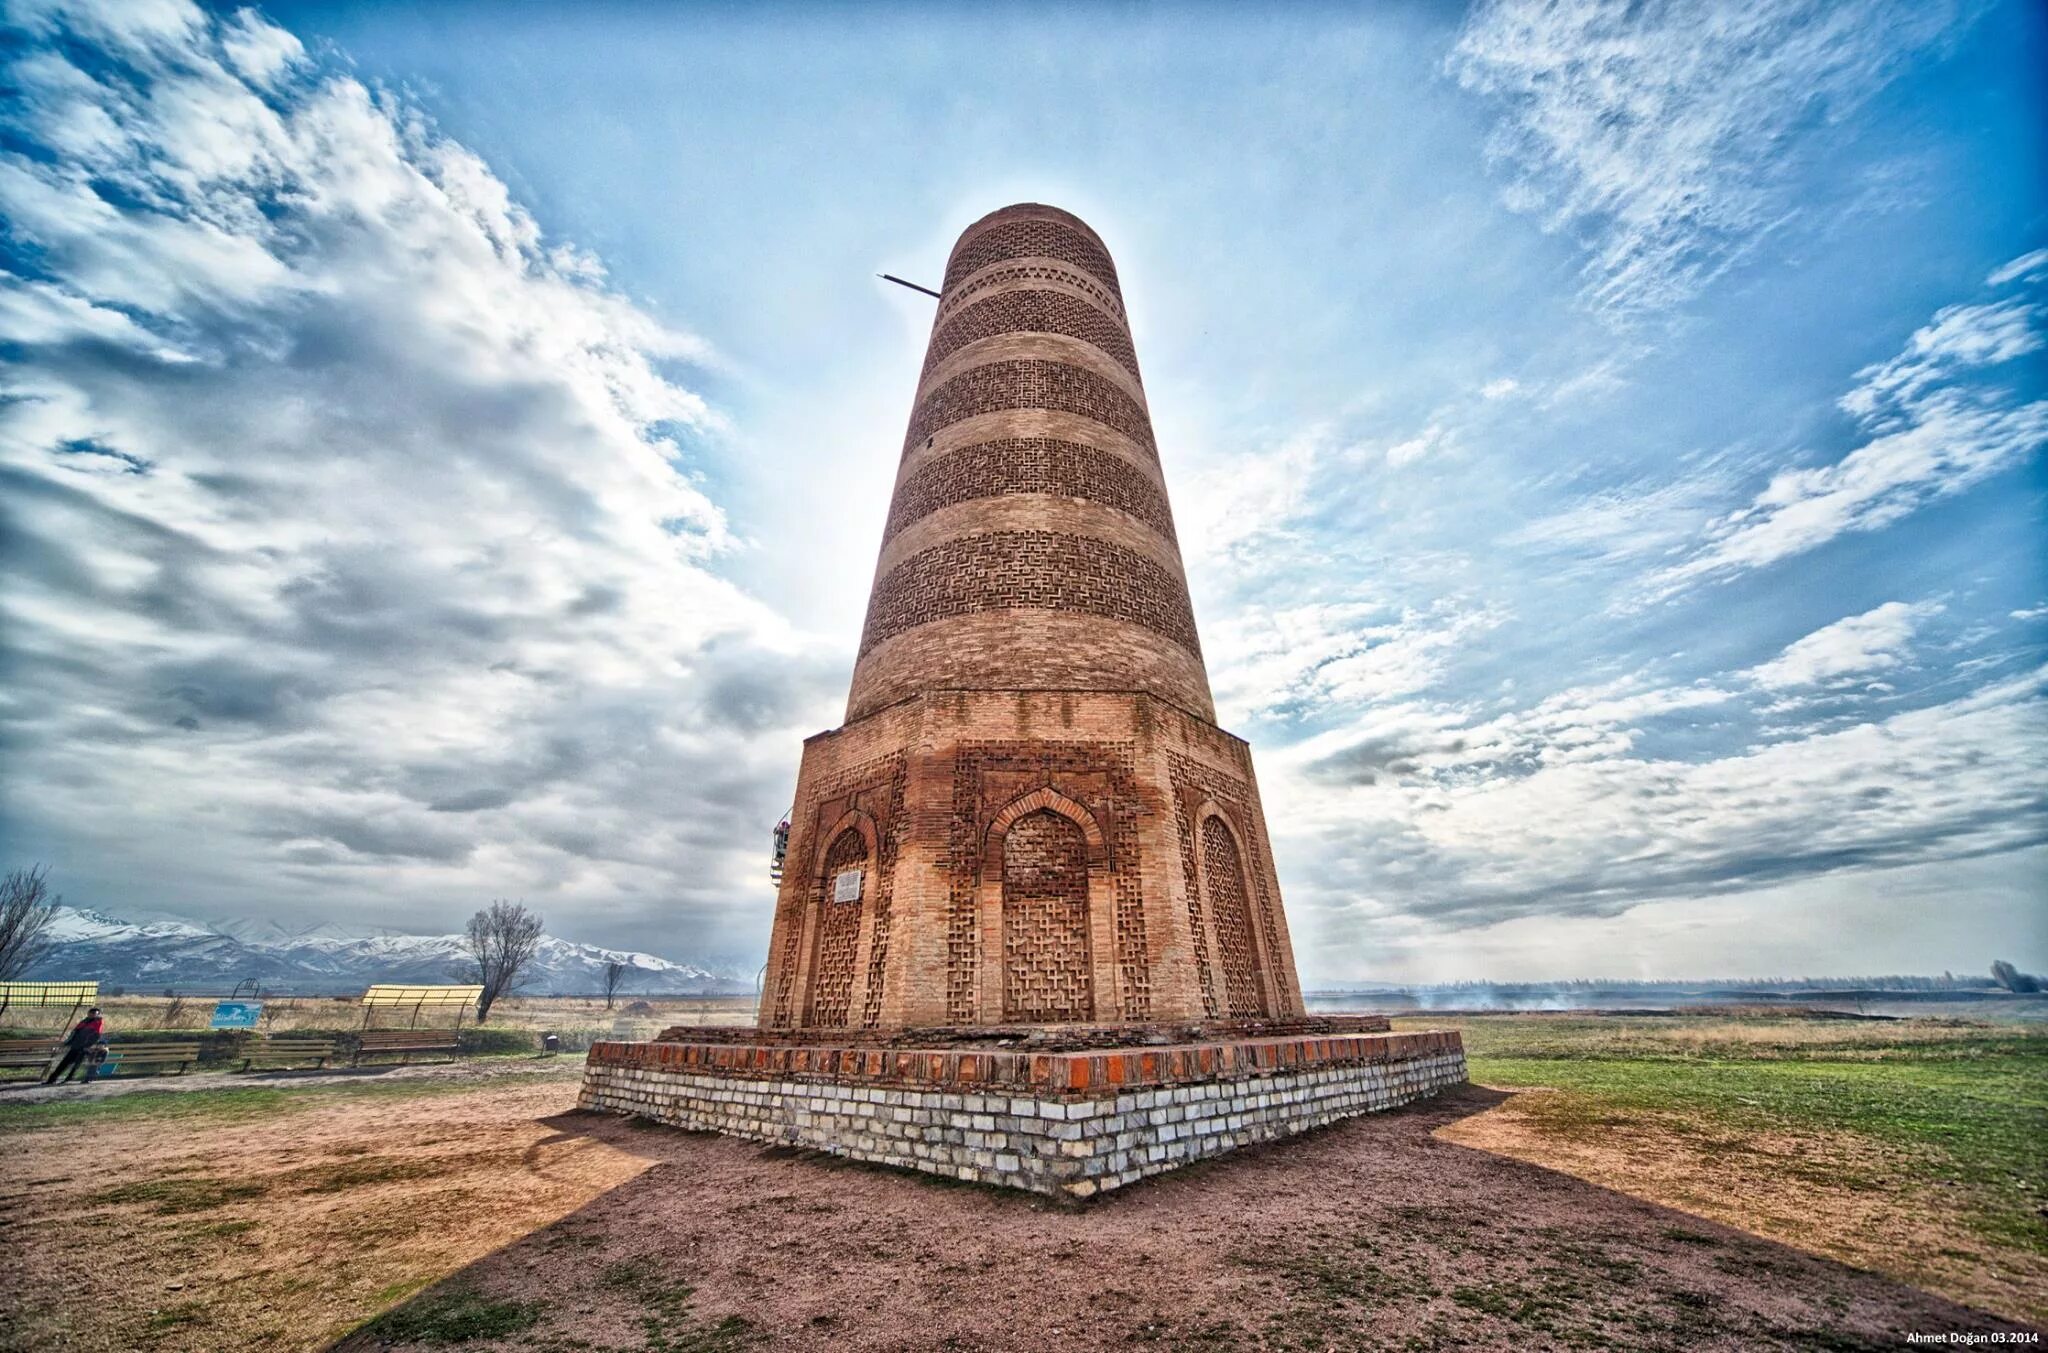 Башня Бурана в Кыргызстане. Токмак башня Бурана. Башня Бурана Чуйская область. Башня Бурана архитектура Караханидов. Башни пал